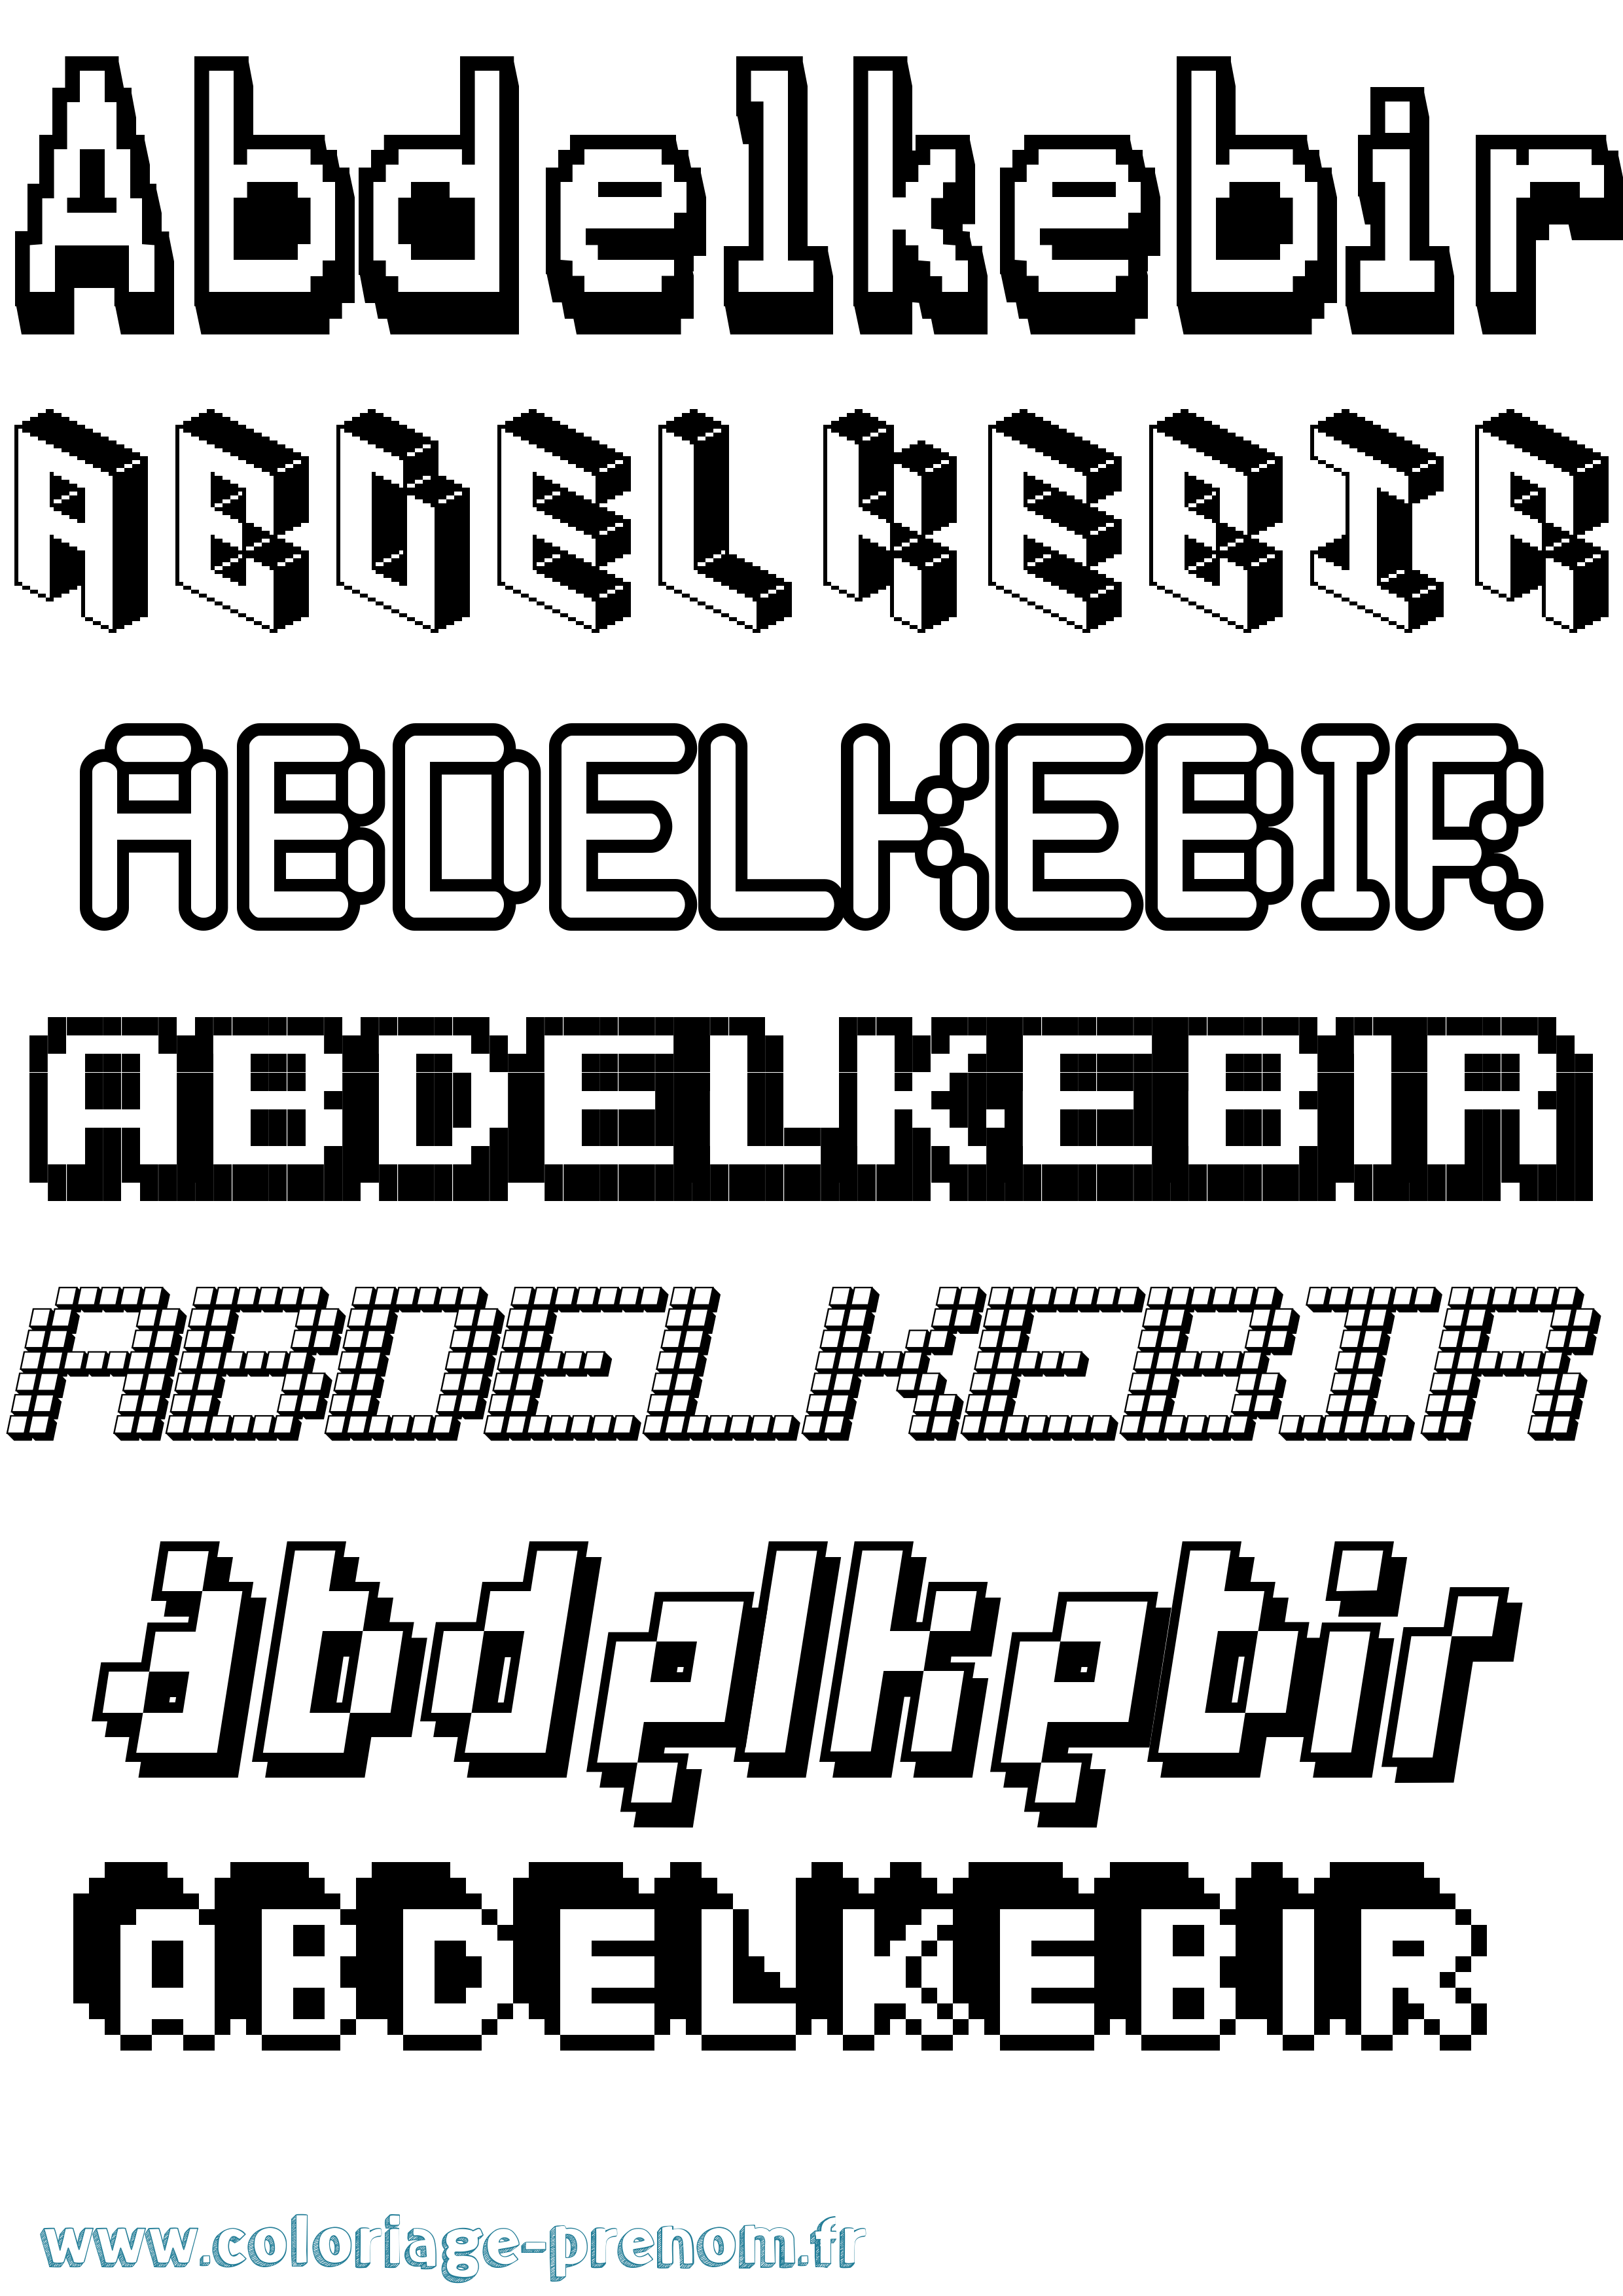 Coloriage prénom Abdelkebir Pixel